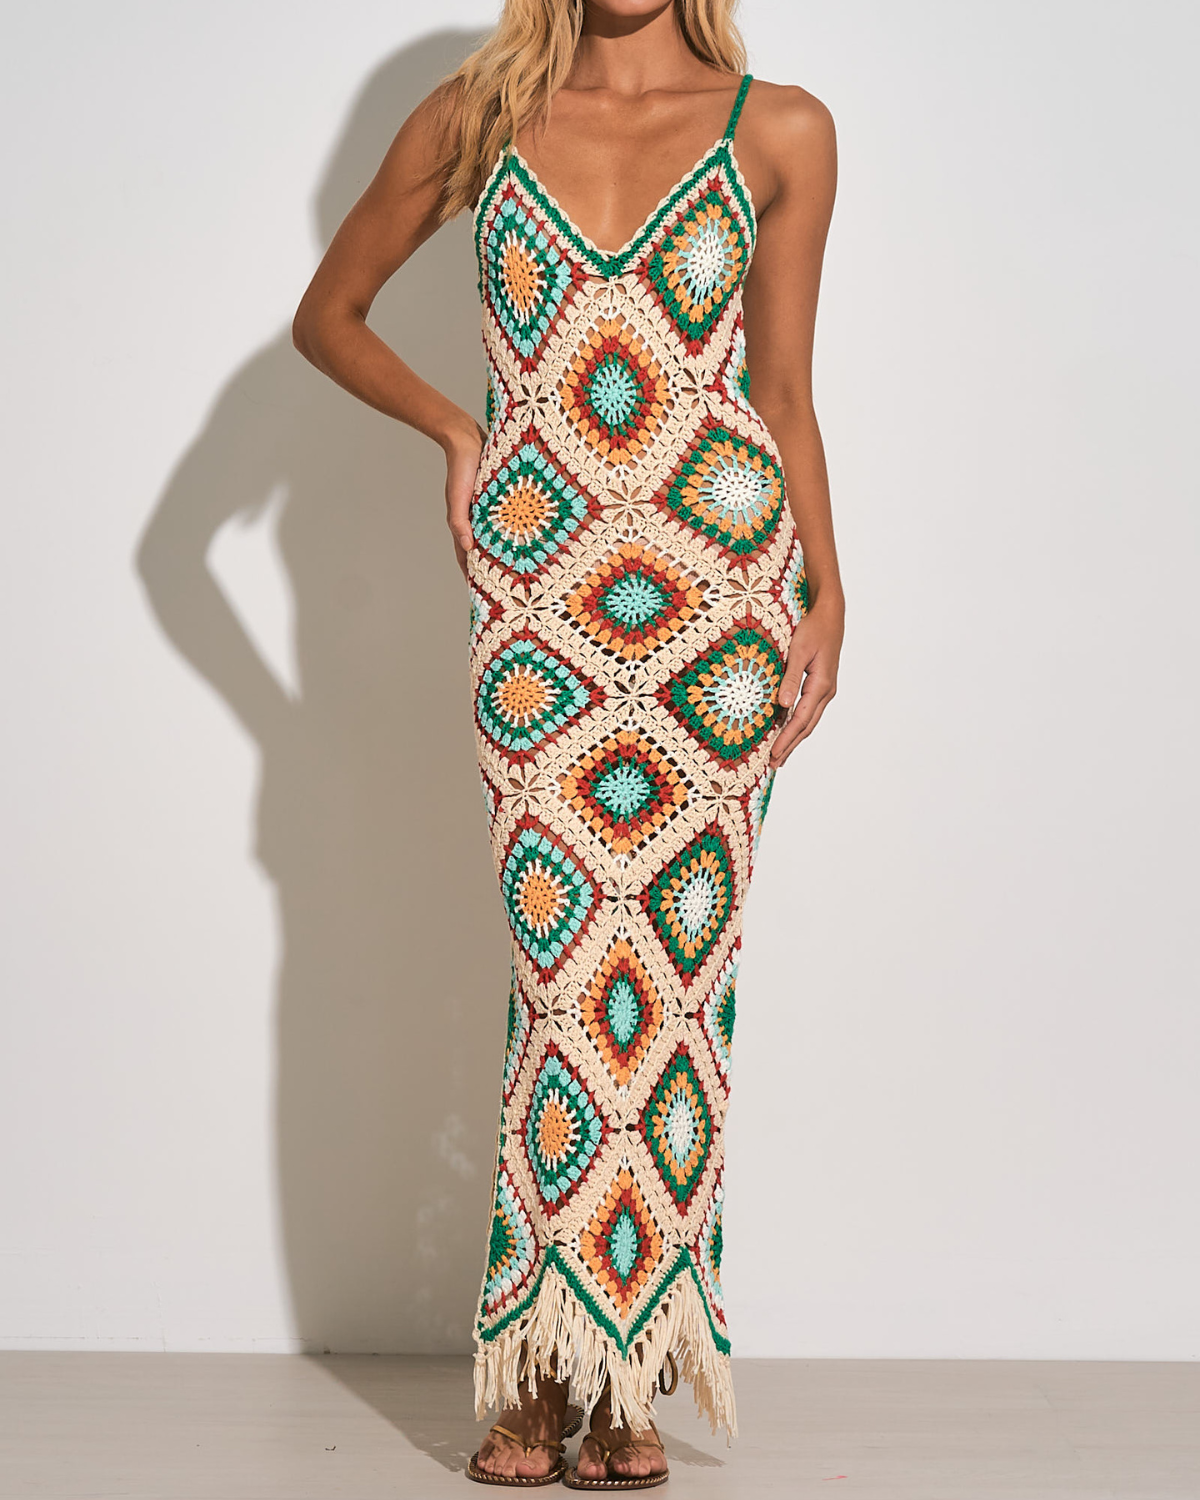 Model wearing a diamond pattern crochet maxi dress in white, green, turquoise, yellow and orange